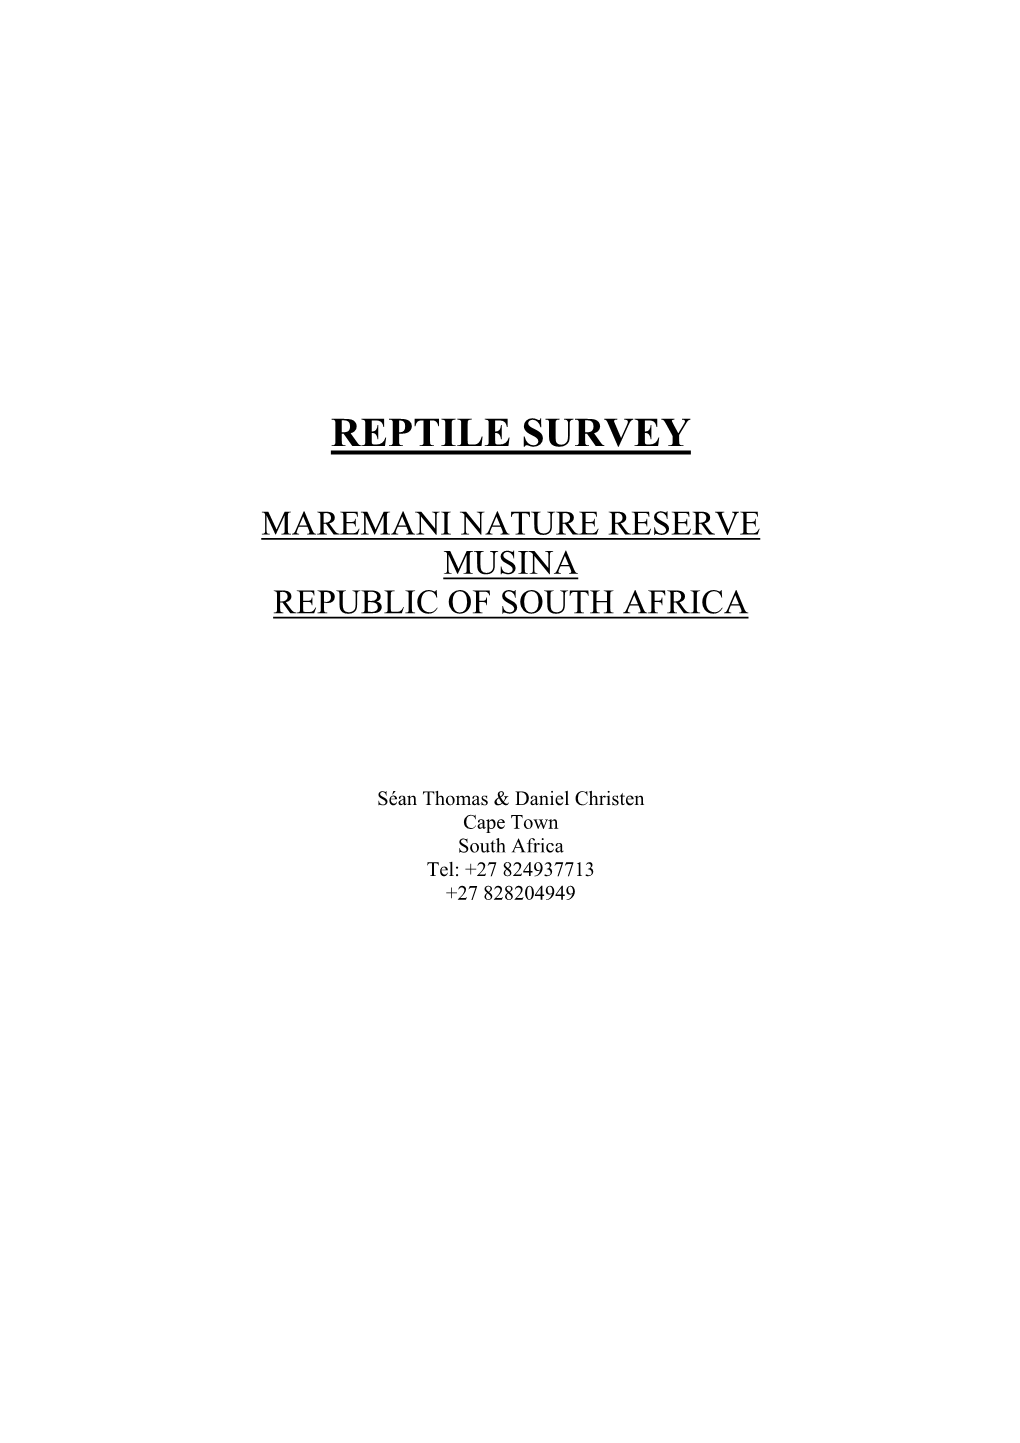 Reptile Survey